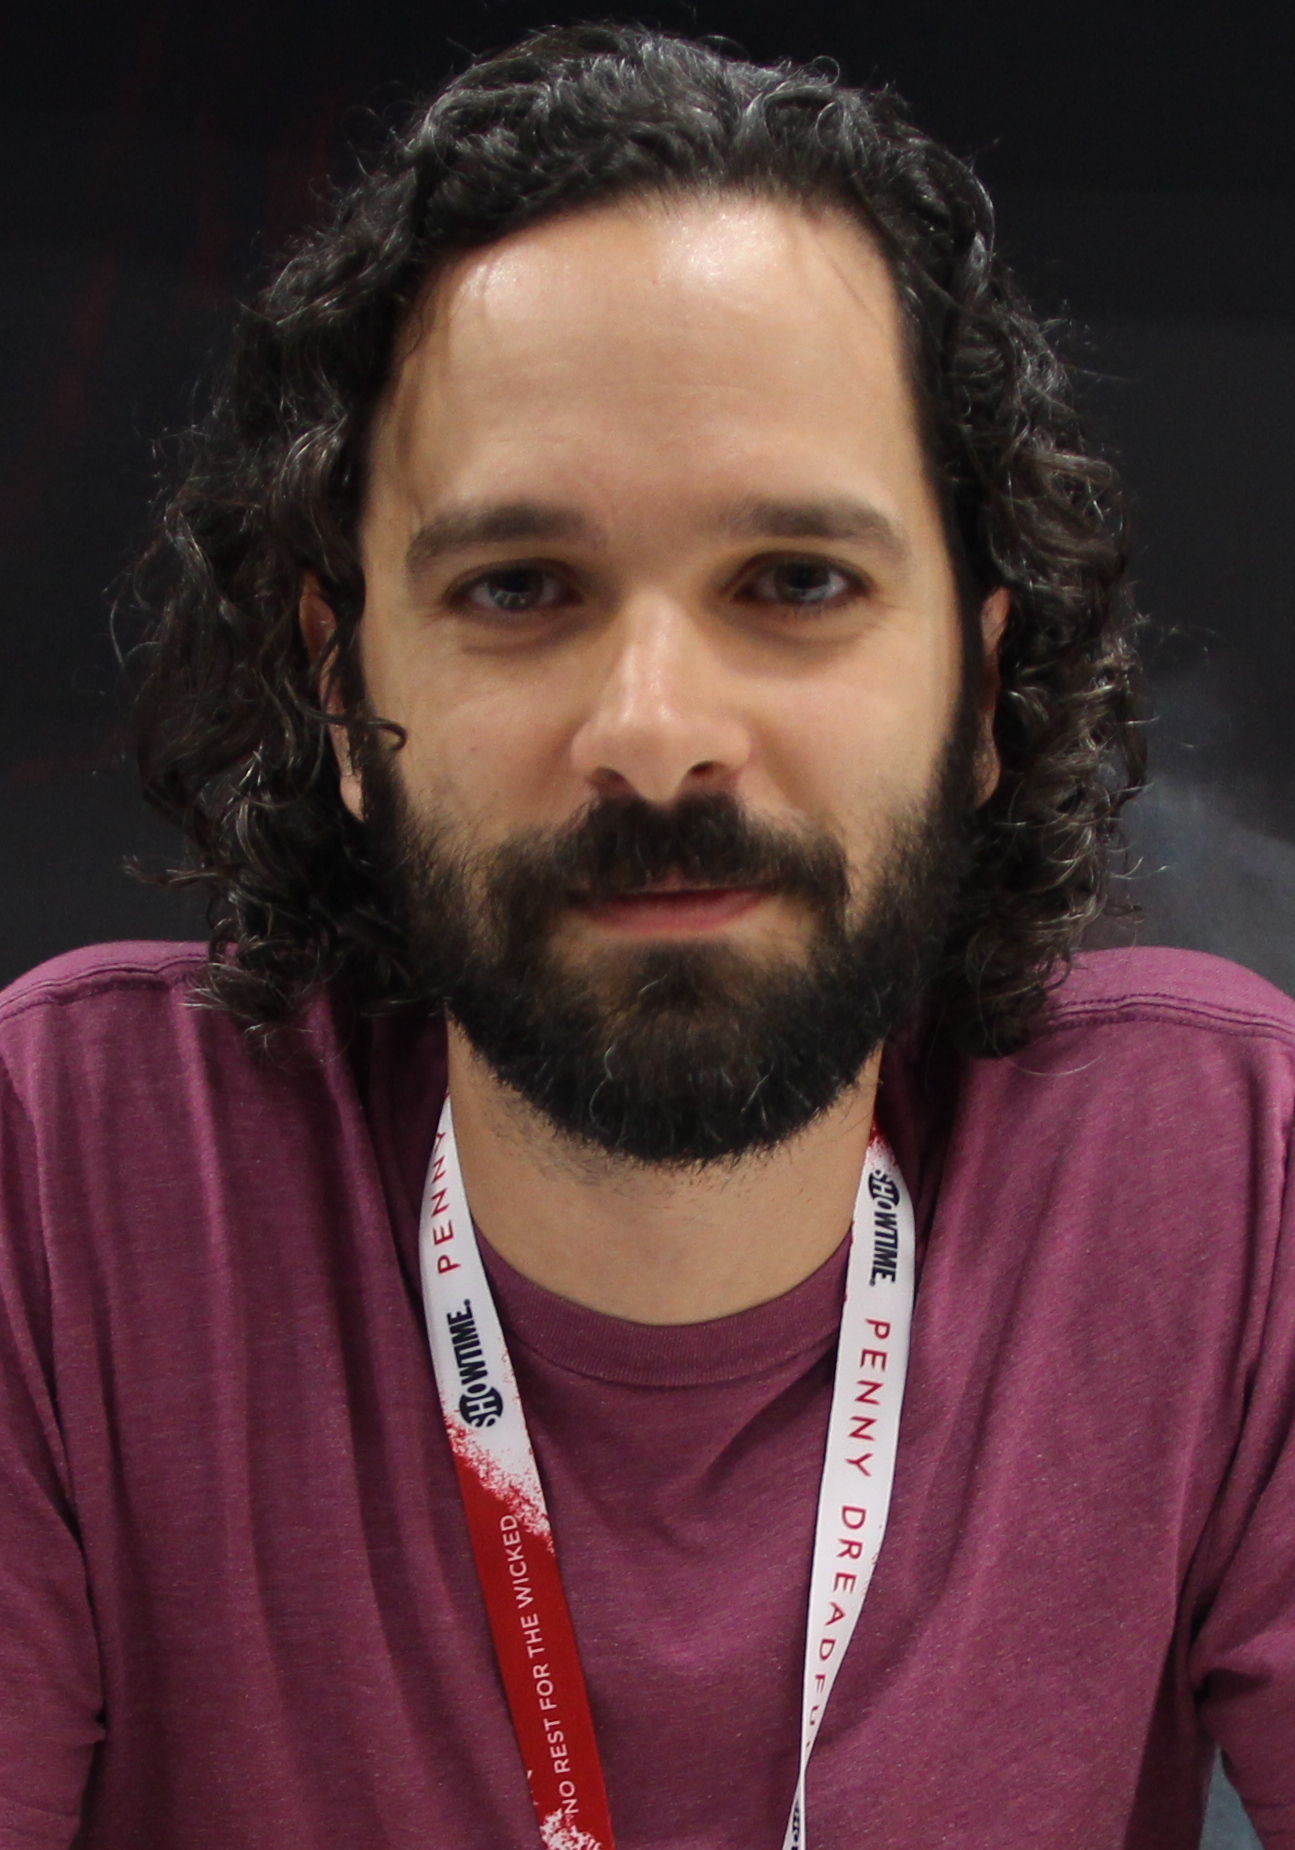 Diretor de The Last of Us reclama de anúncios prematuros - NerdBunker